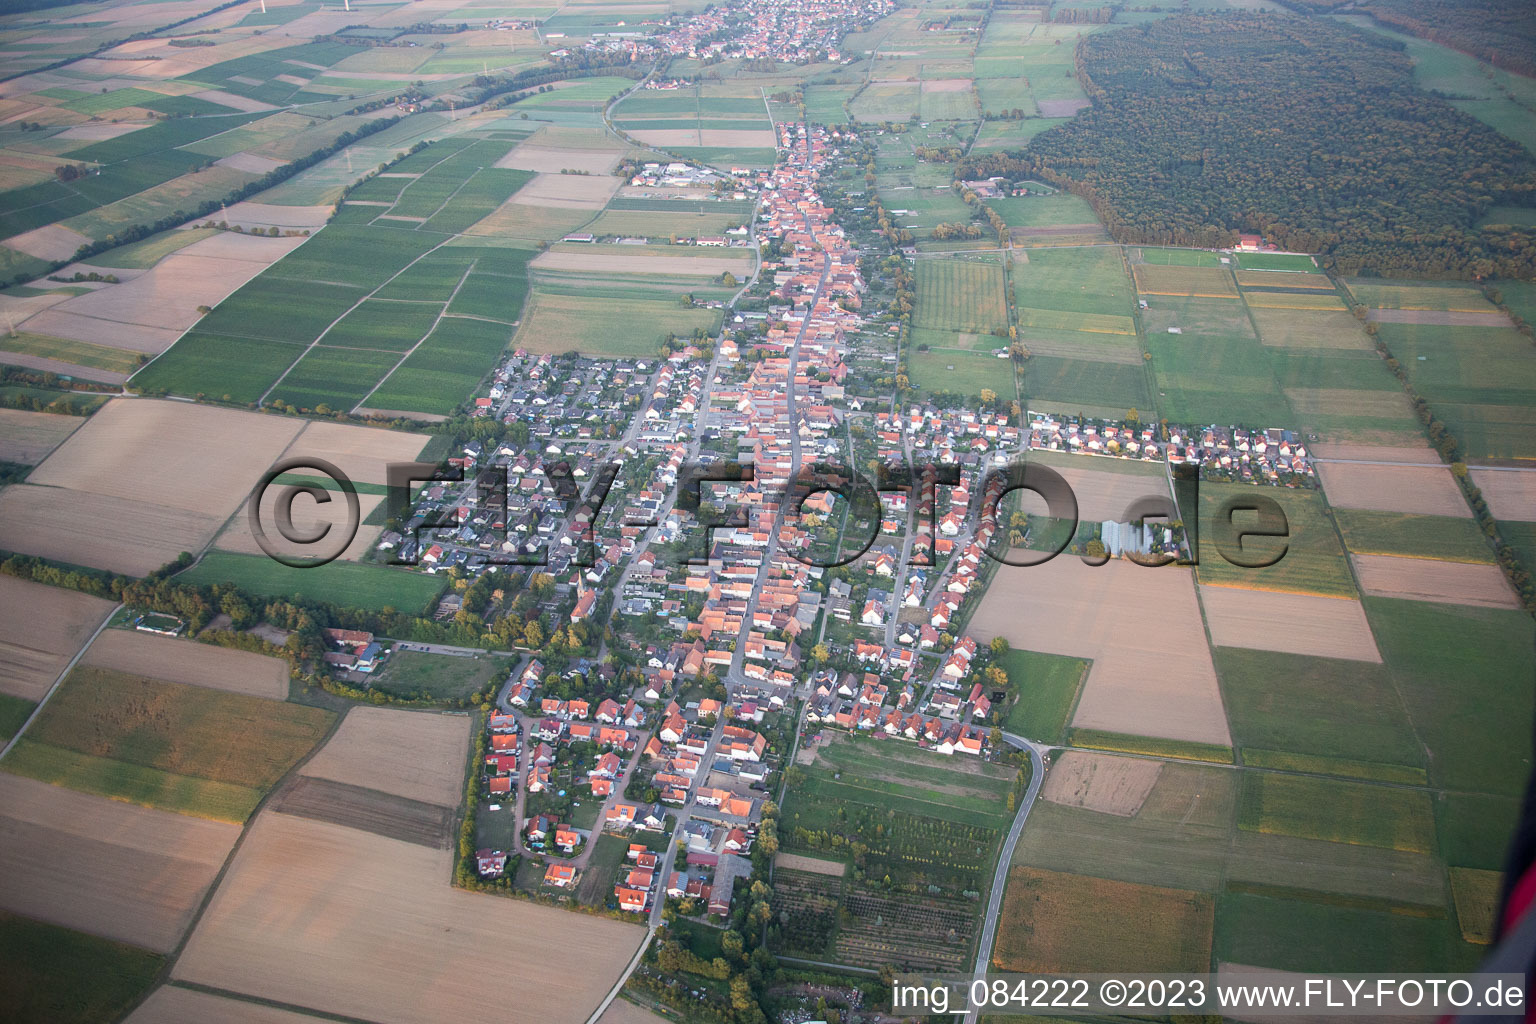 District Schaidt in Wörth am Rhein in the state Rhineland-Palatinate, Germany seen from above